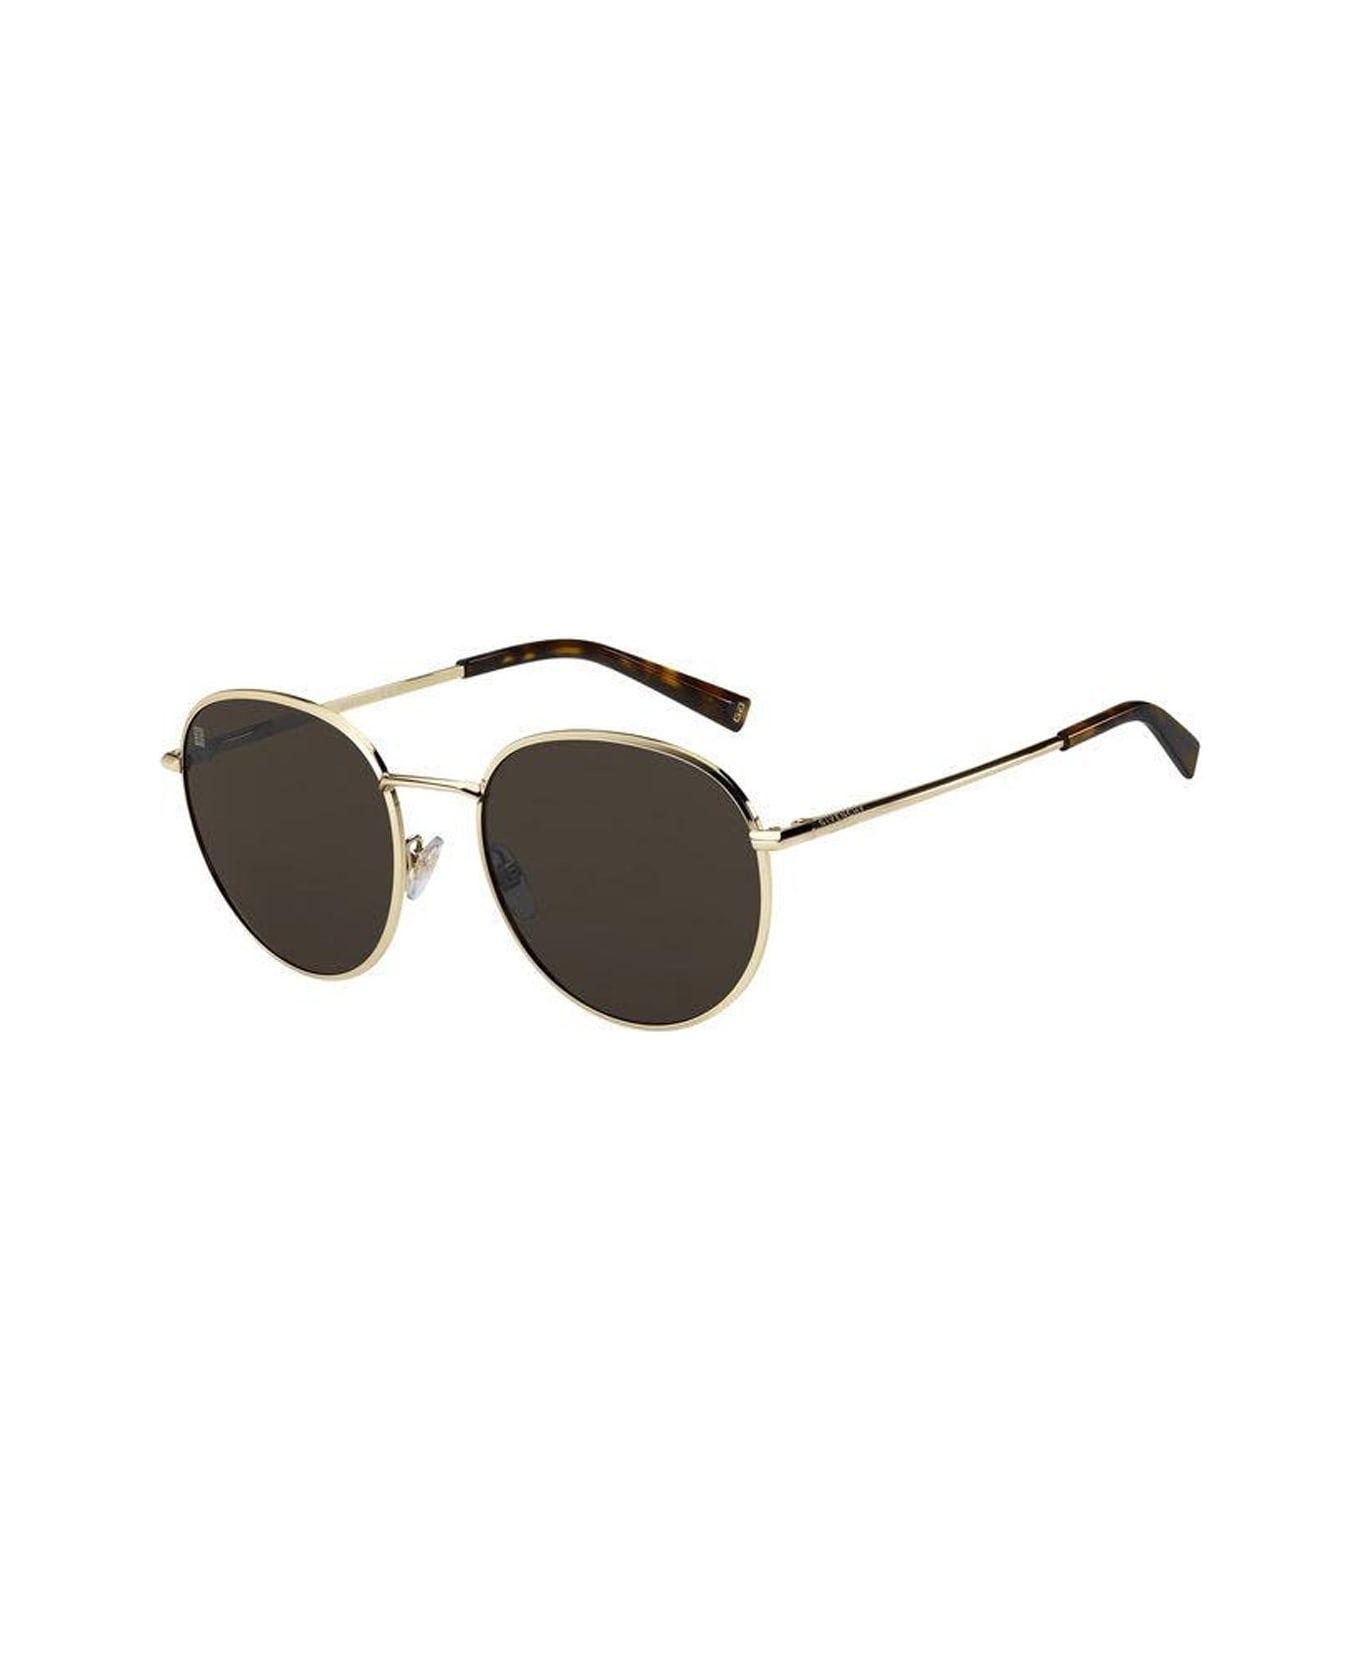 Givenchy Eyewear Gv 7192/s Sunglasses - Oro